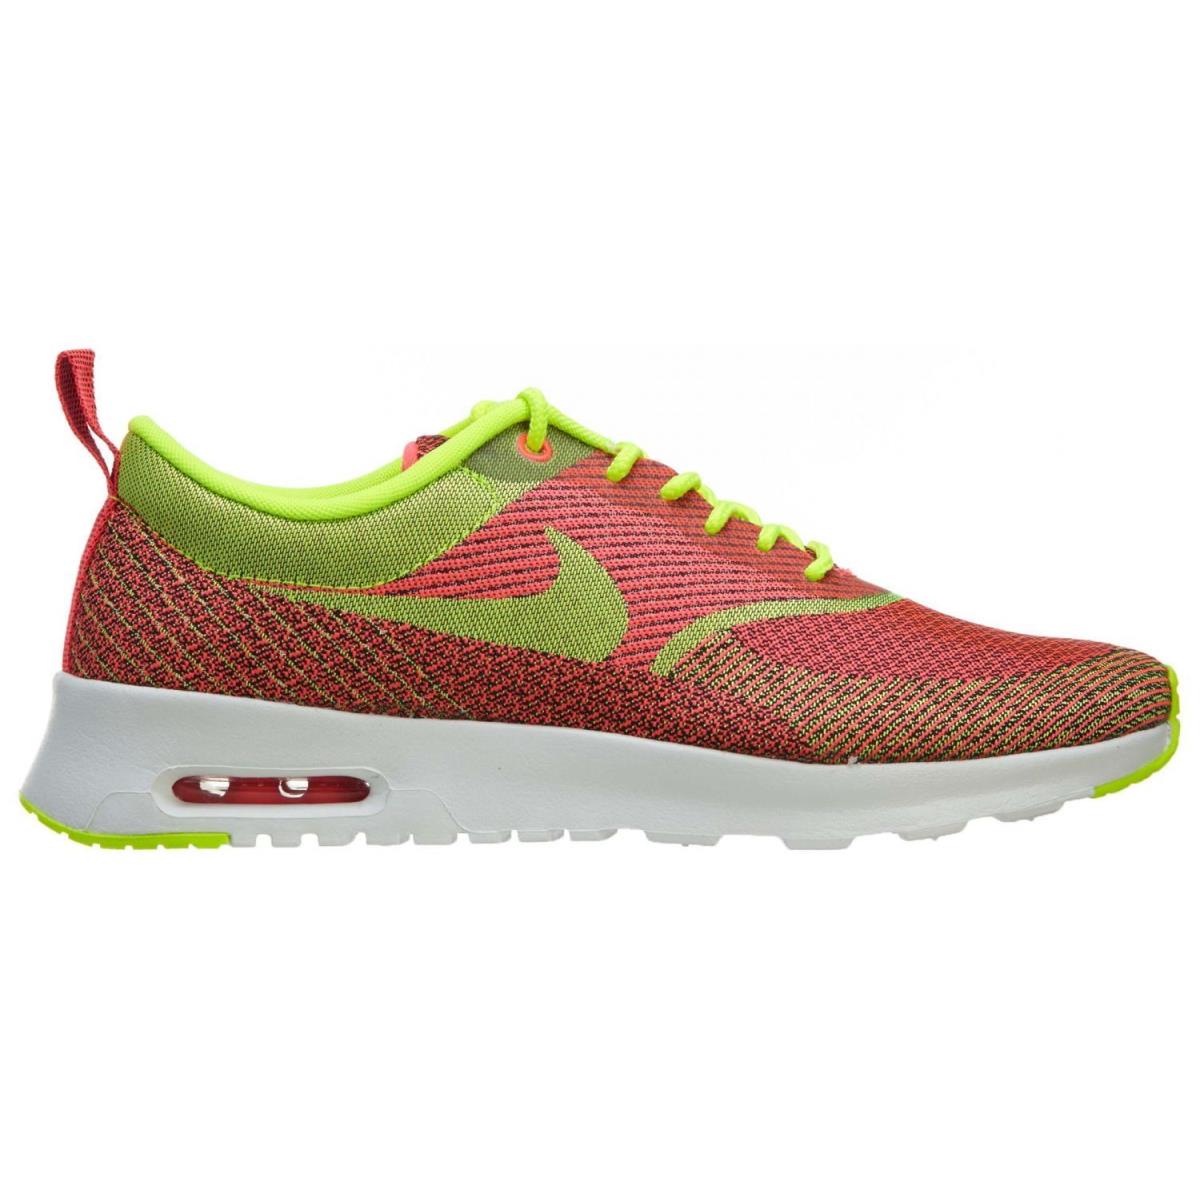 Nike Air Max Thea Jcrd QS Womens 666545-607 Punch Volt Running Shoes Size 10